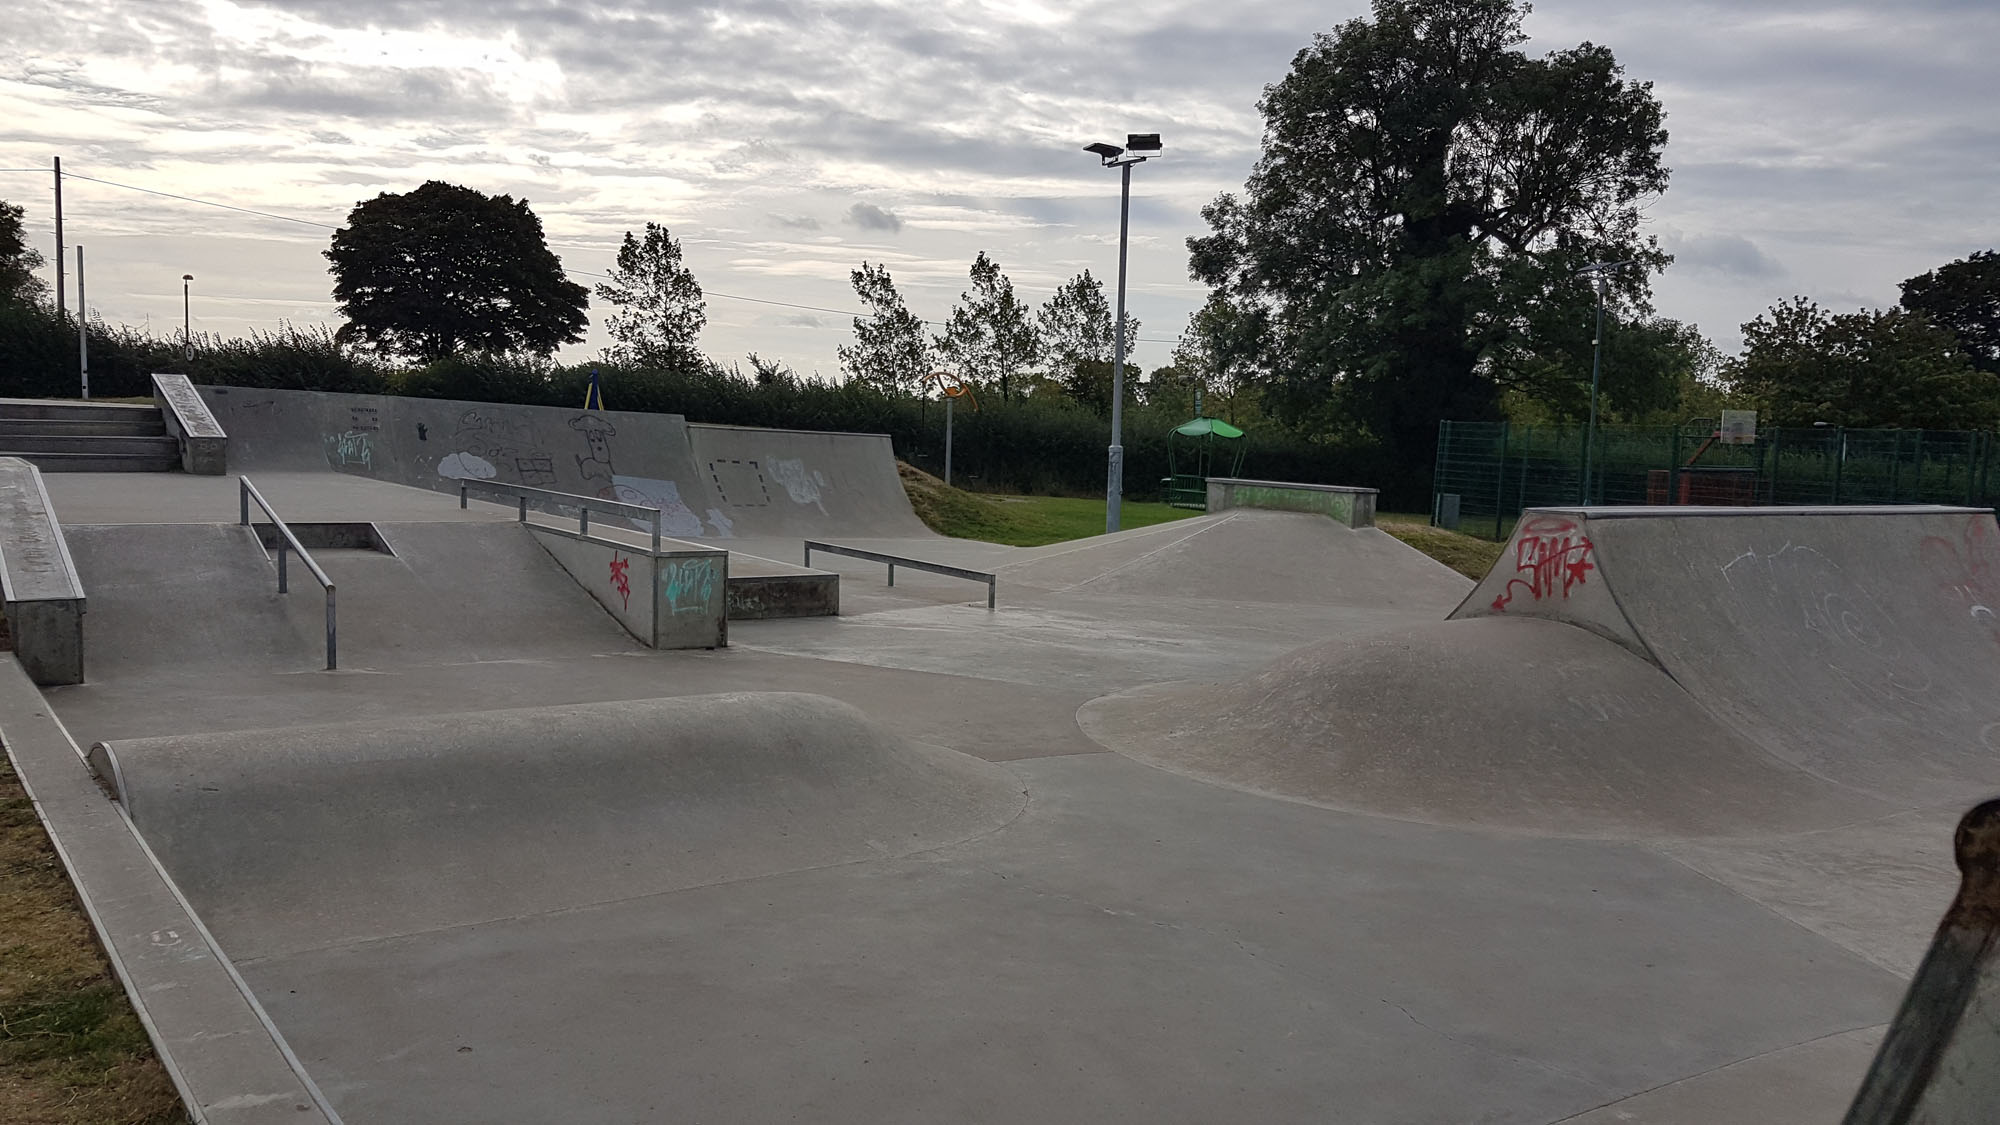 cheshunt skatepark review tips skateboarding in hertfordshire u k